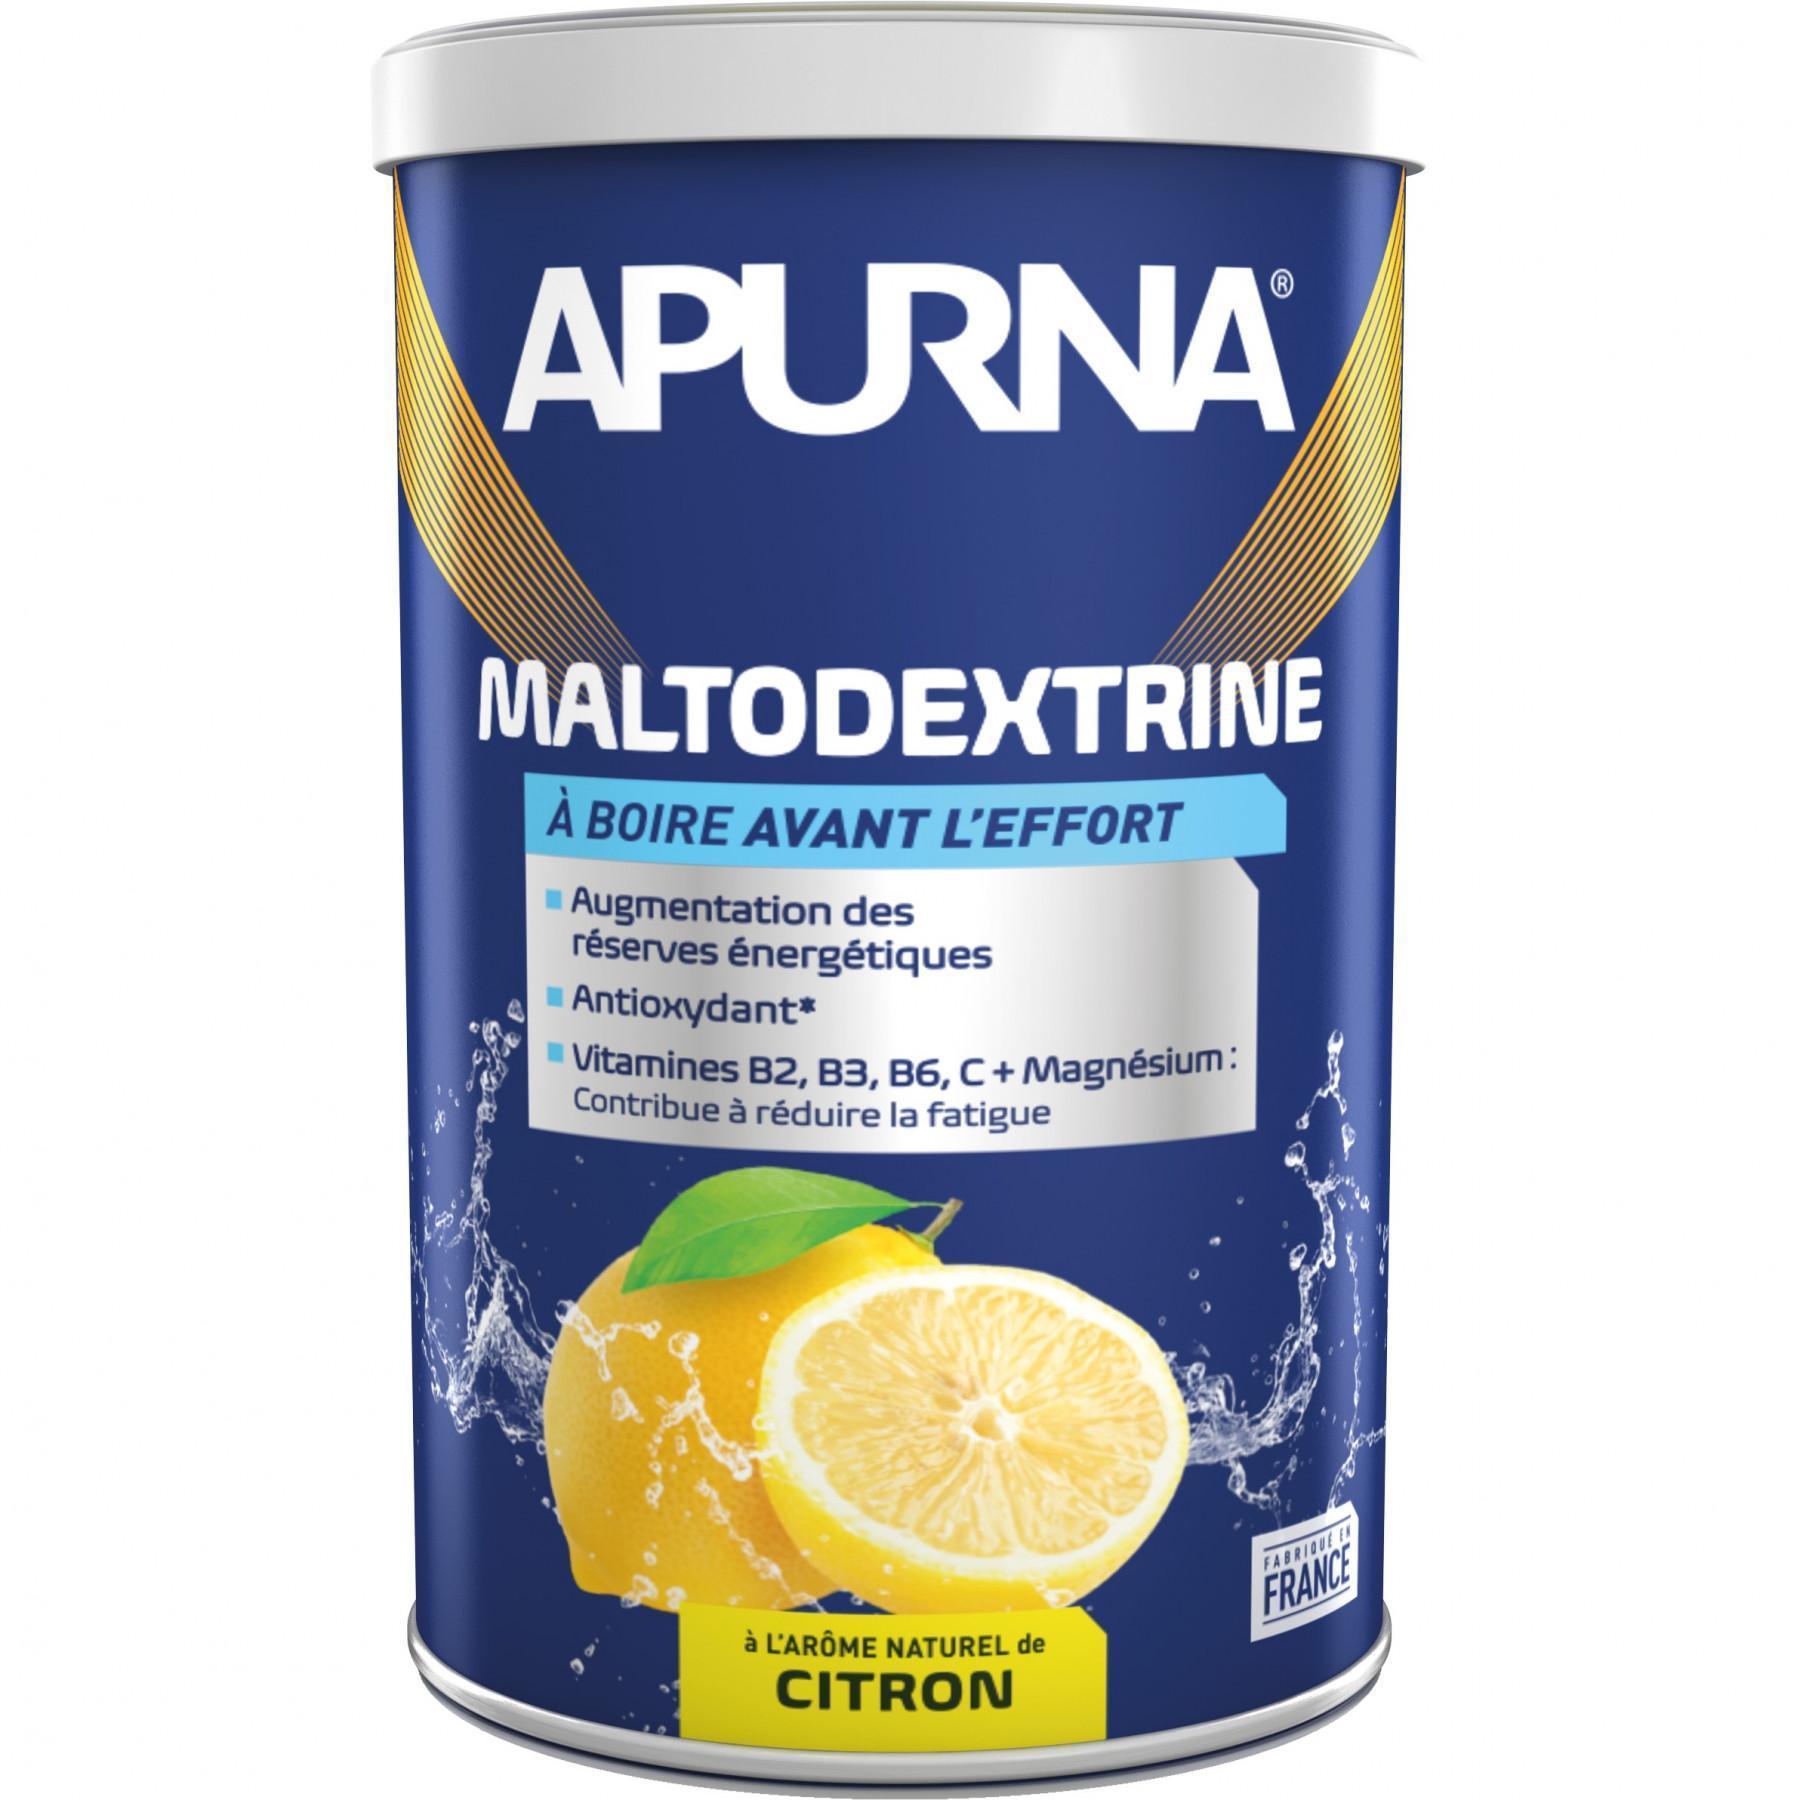 Garnek Apurna maltodextrine citron - 500g